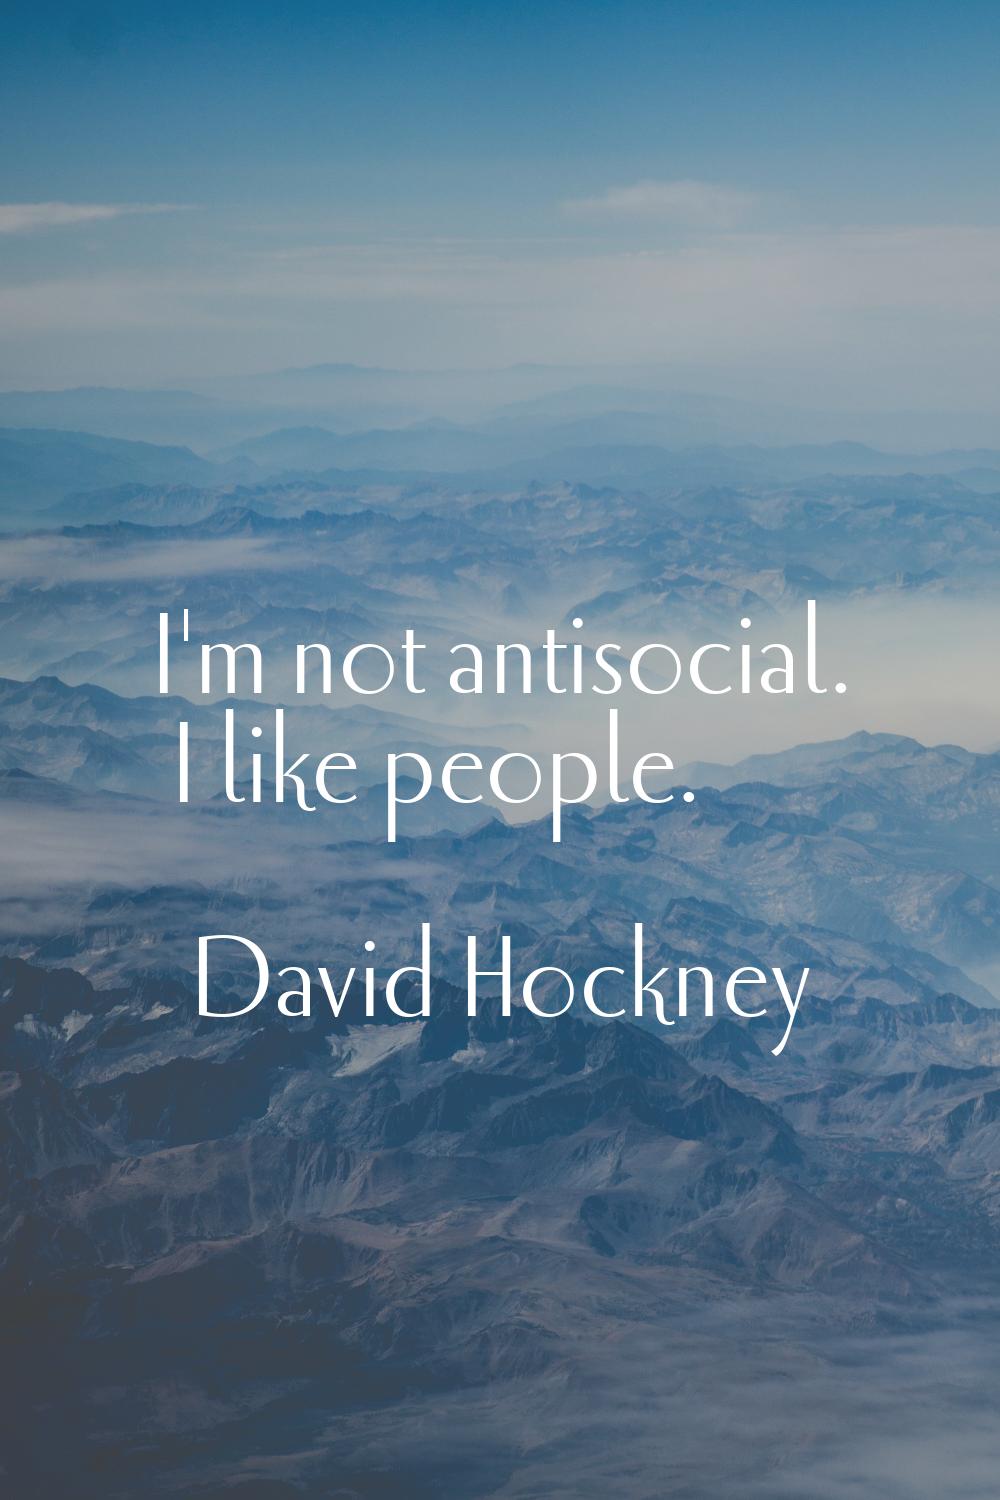 I'm not antisocial. I like people.